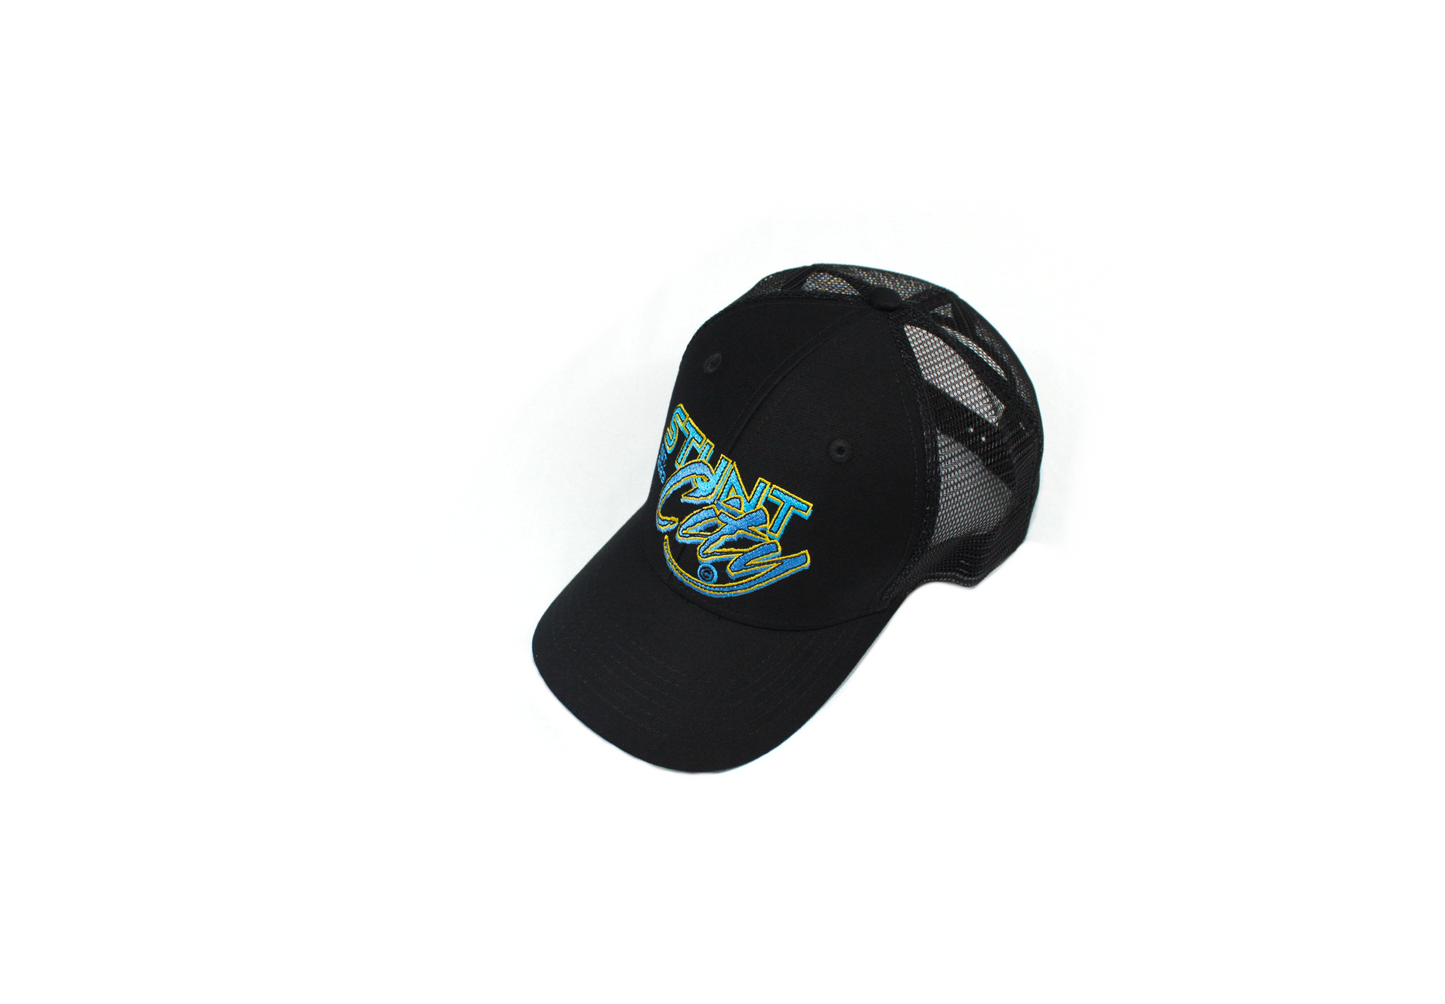 Black hat with blue stunt city logo